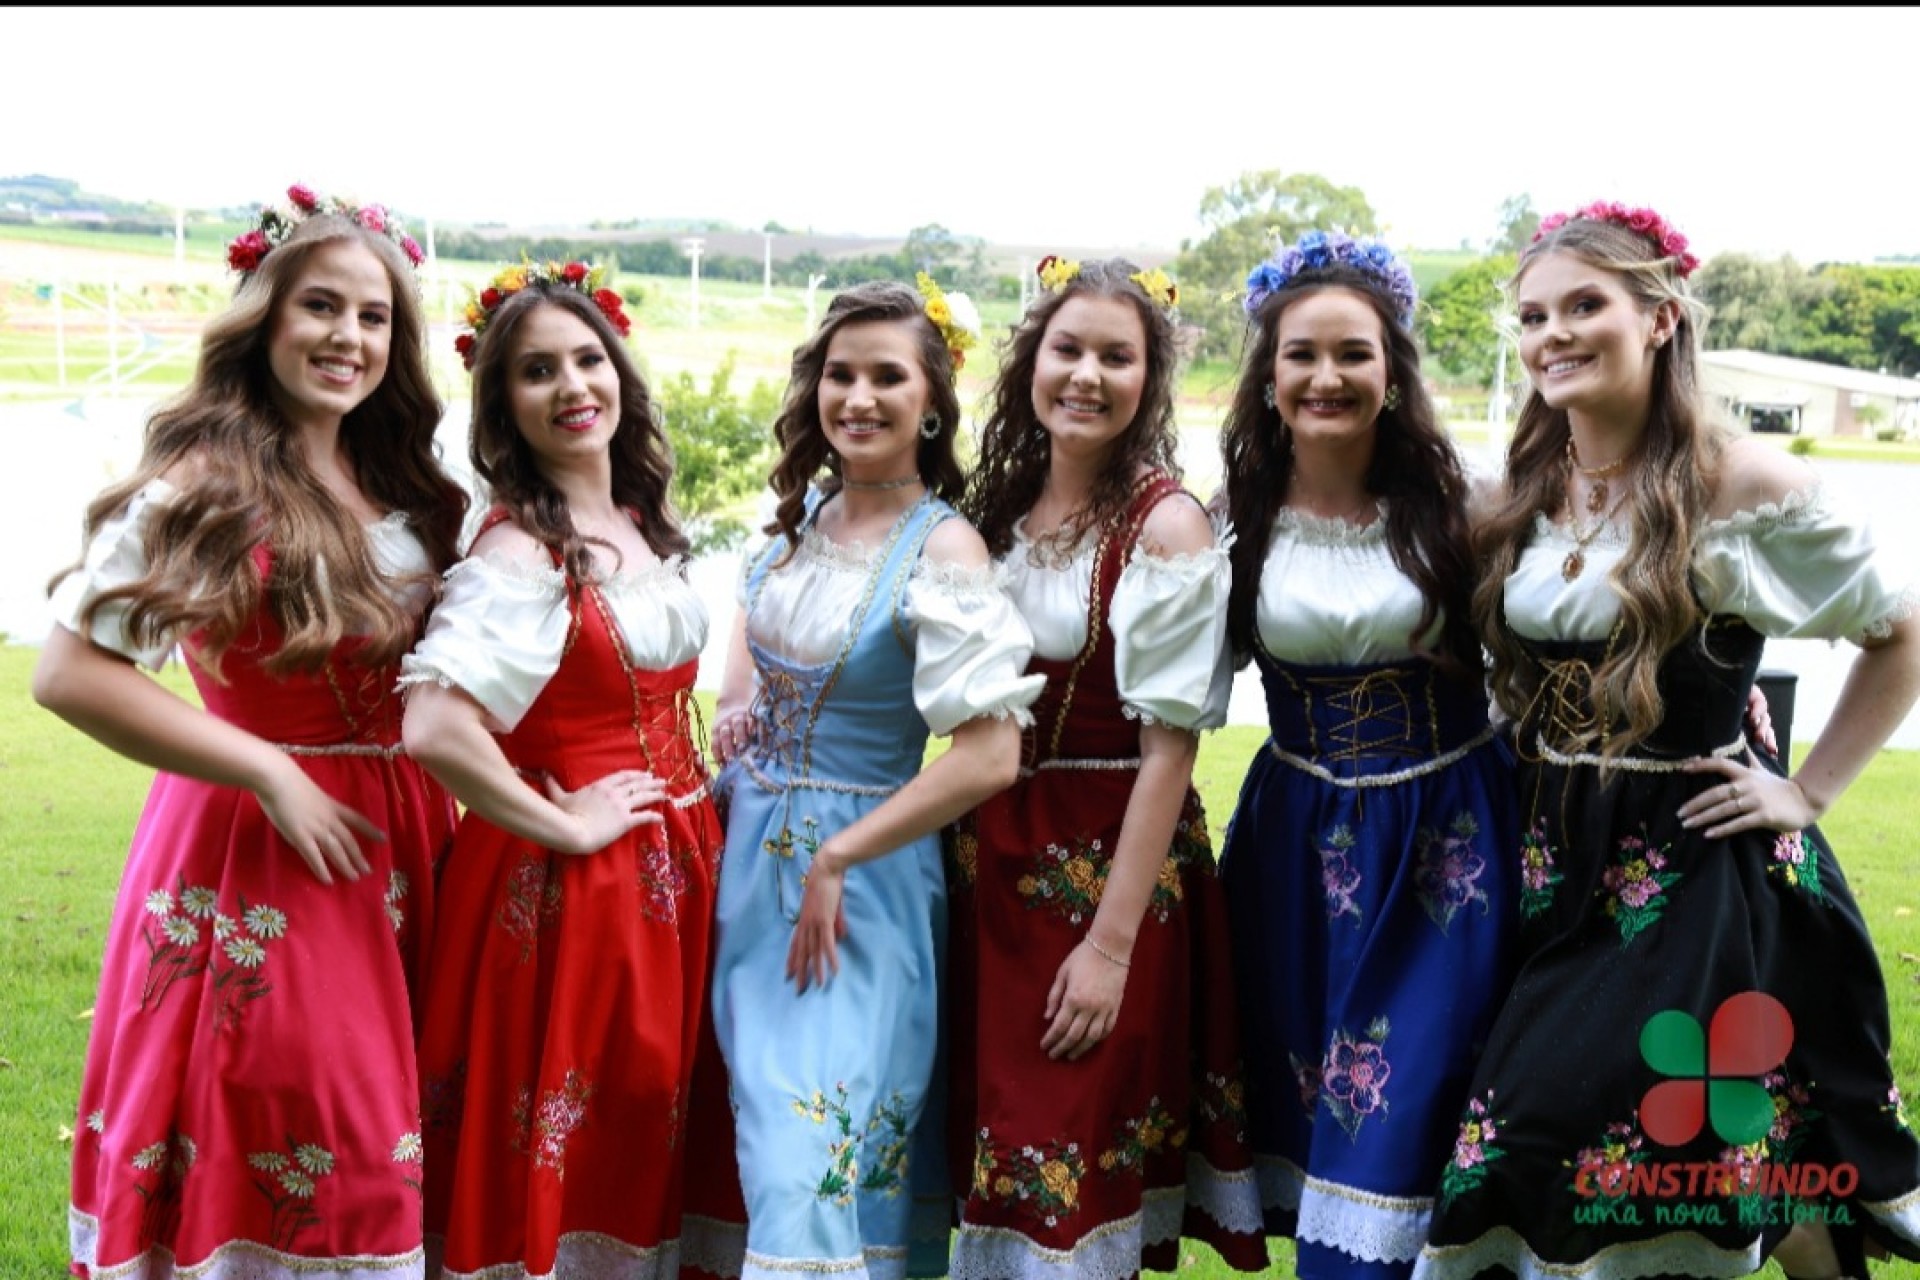 20ª Deutsches Fest tem 06 candidatas a Rainha